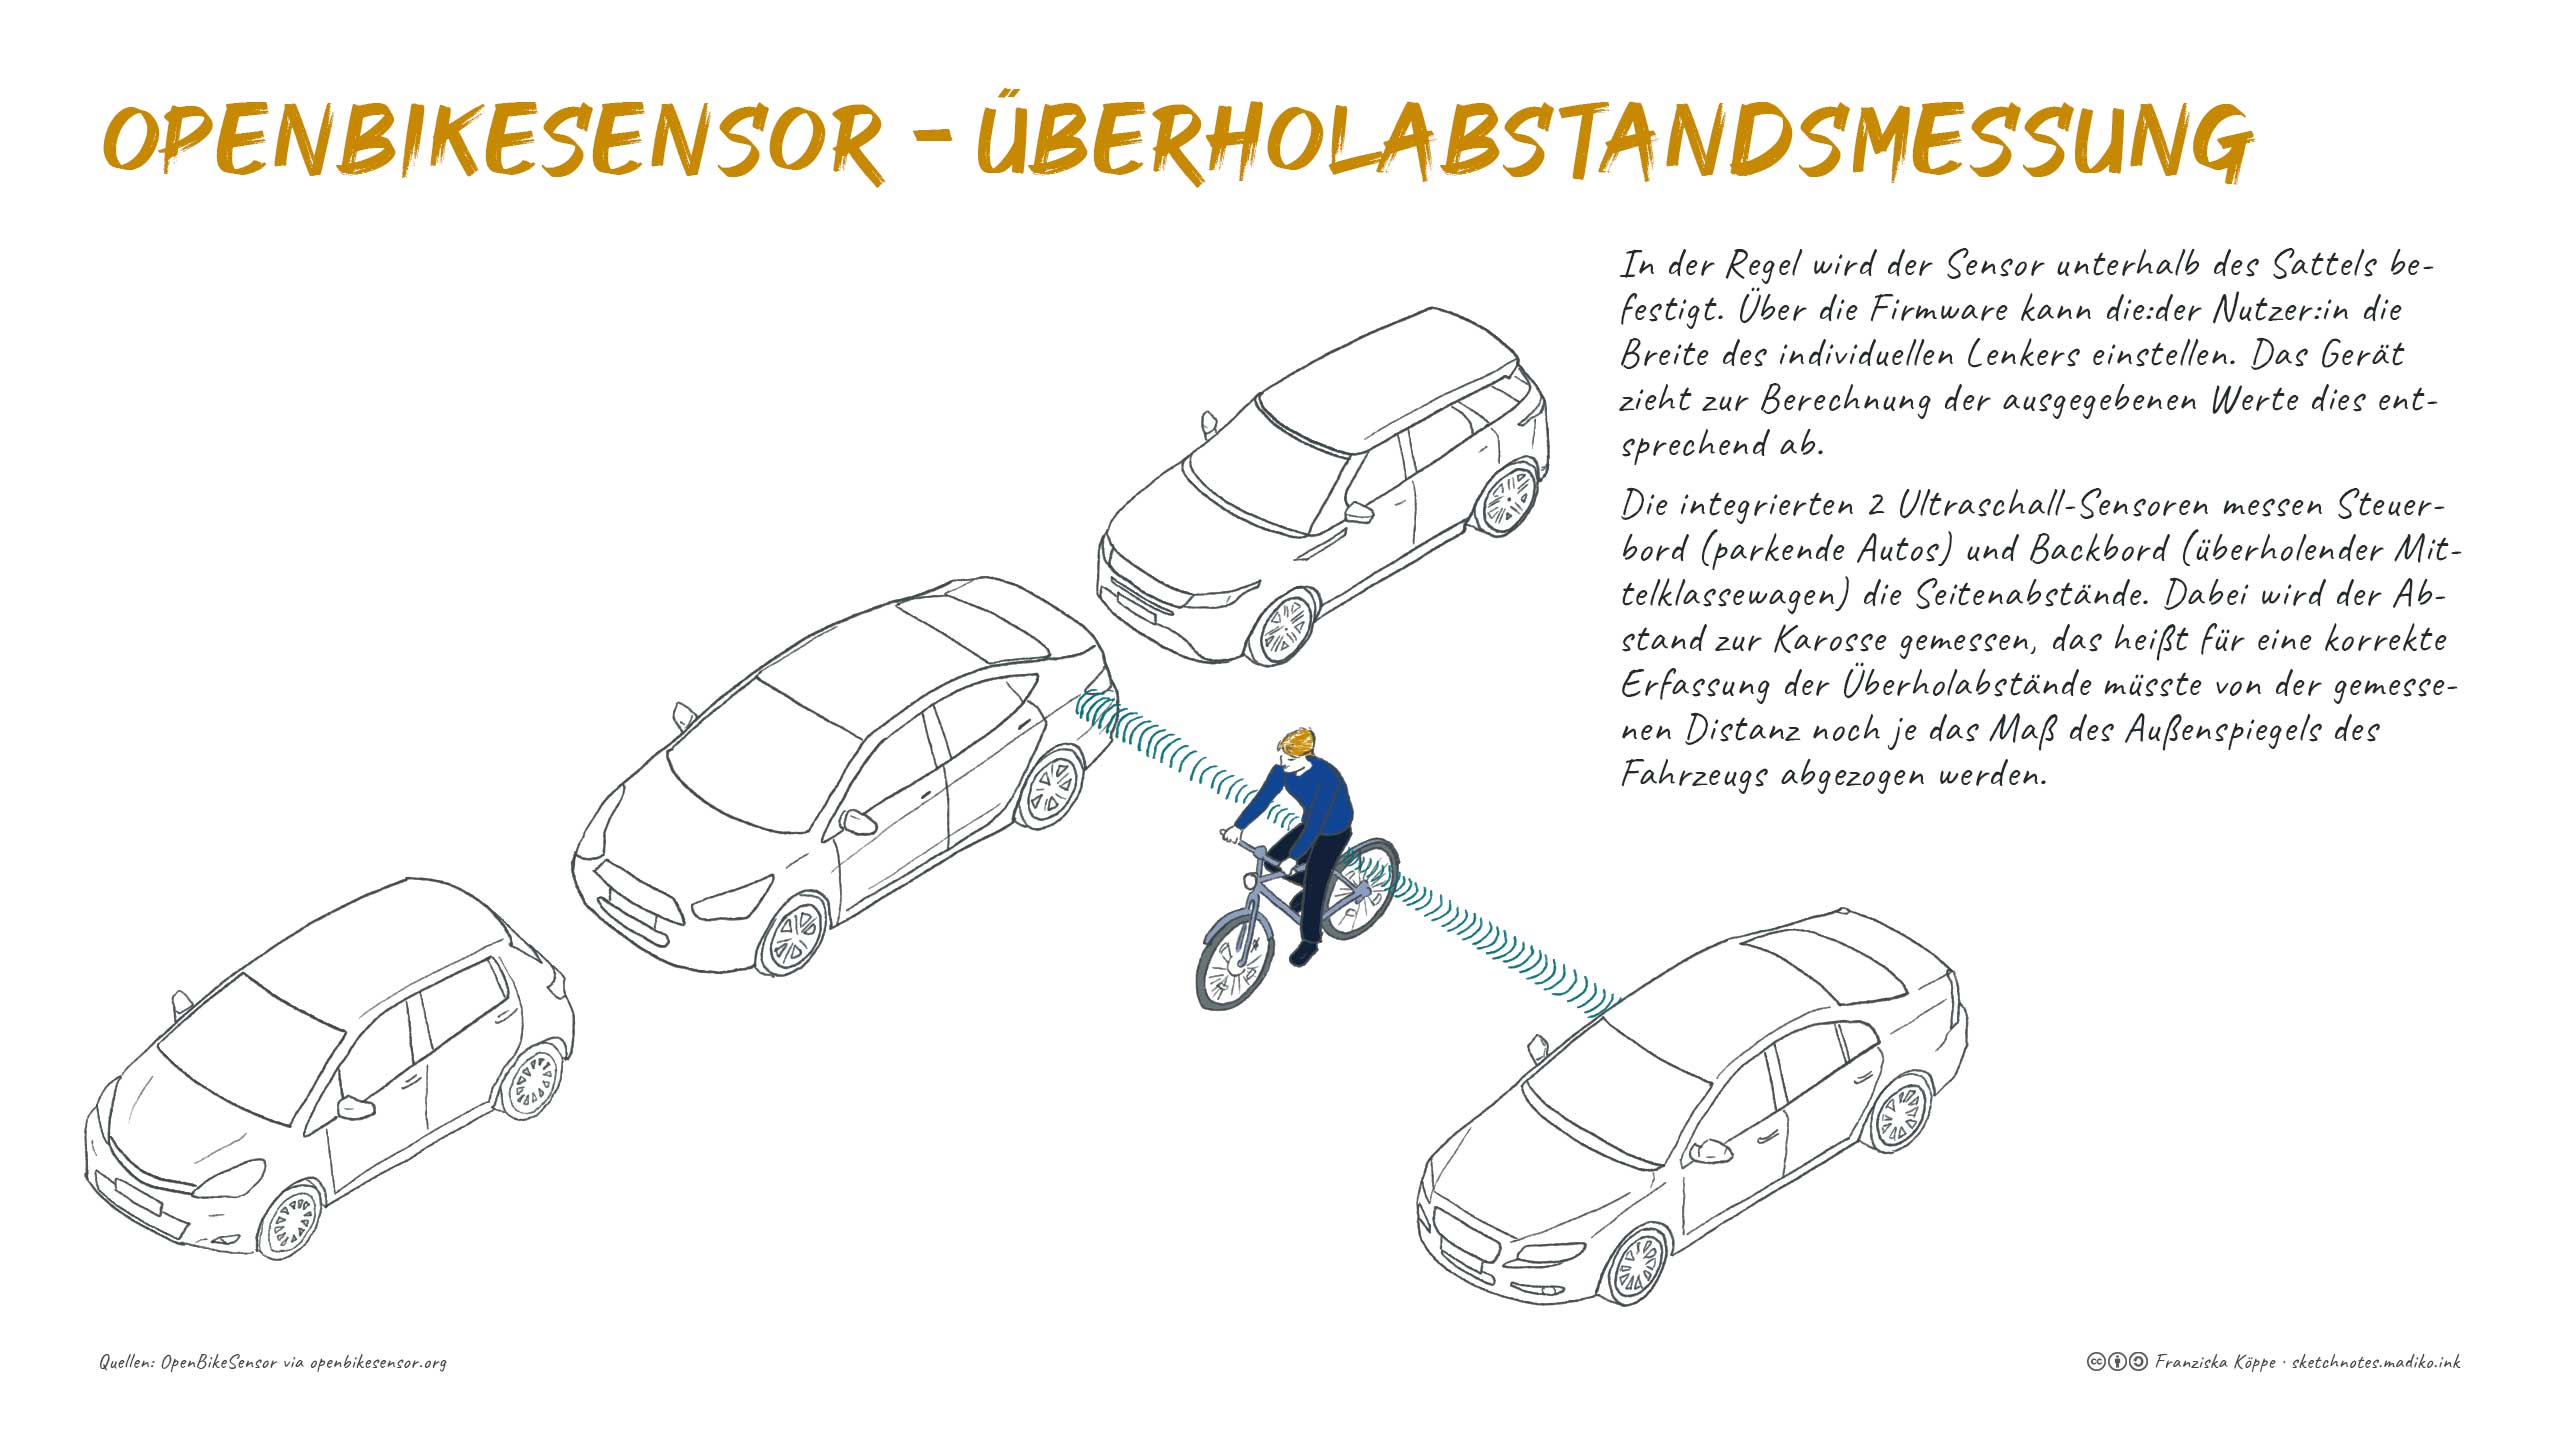 OpenBikeSensor: Funktionsweise Überholabstandsmessung. Bild: cc Franziska Köppe | madiko sketchnotes